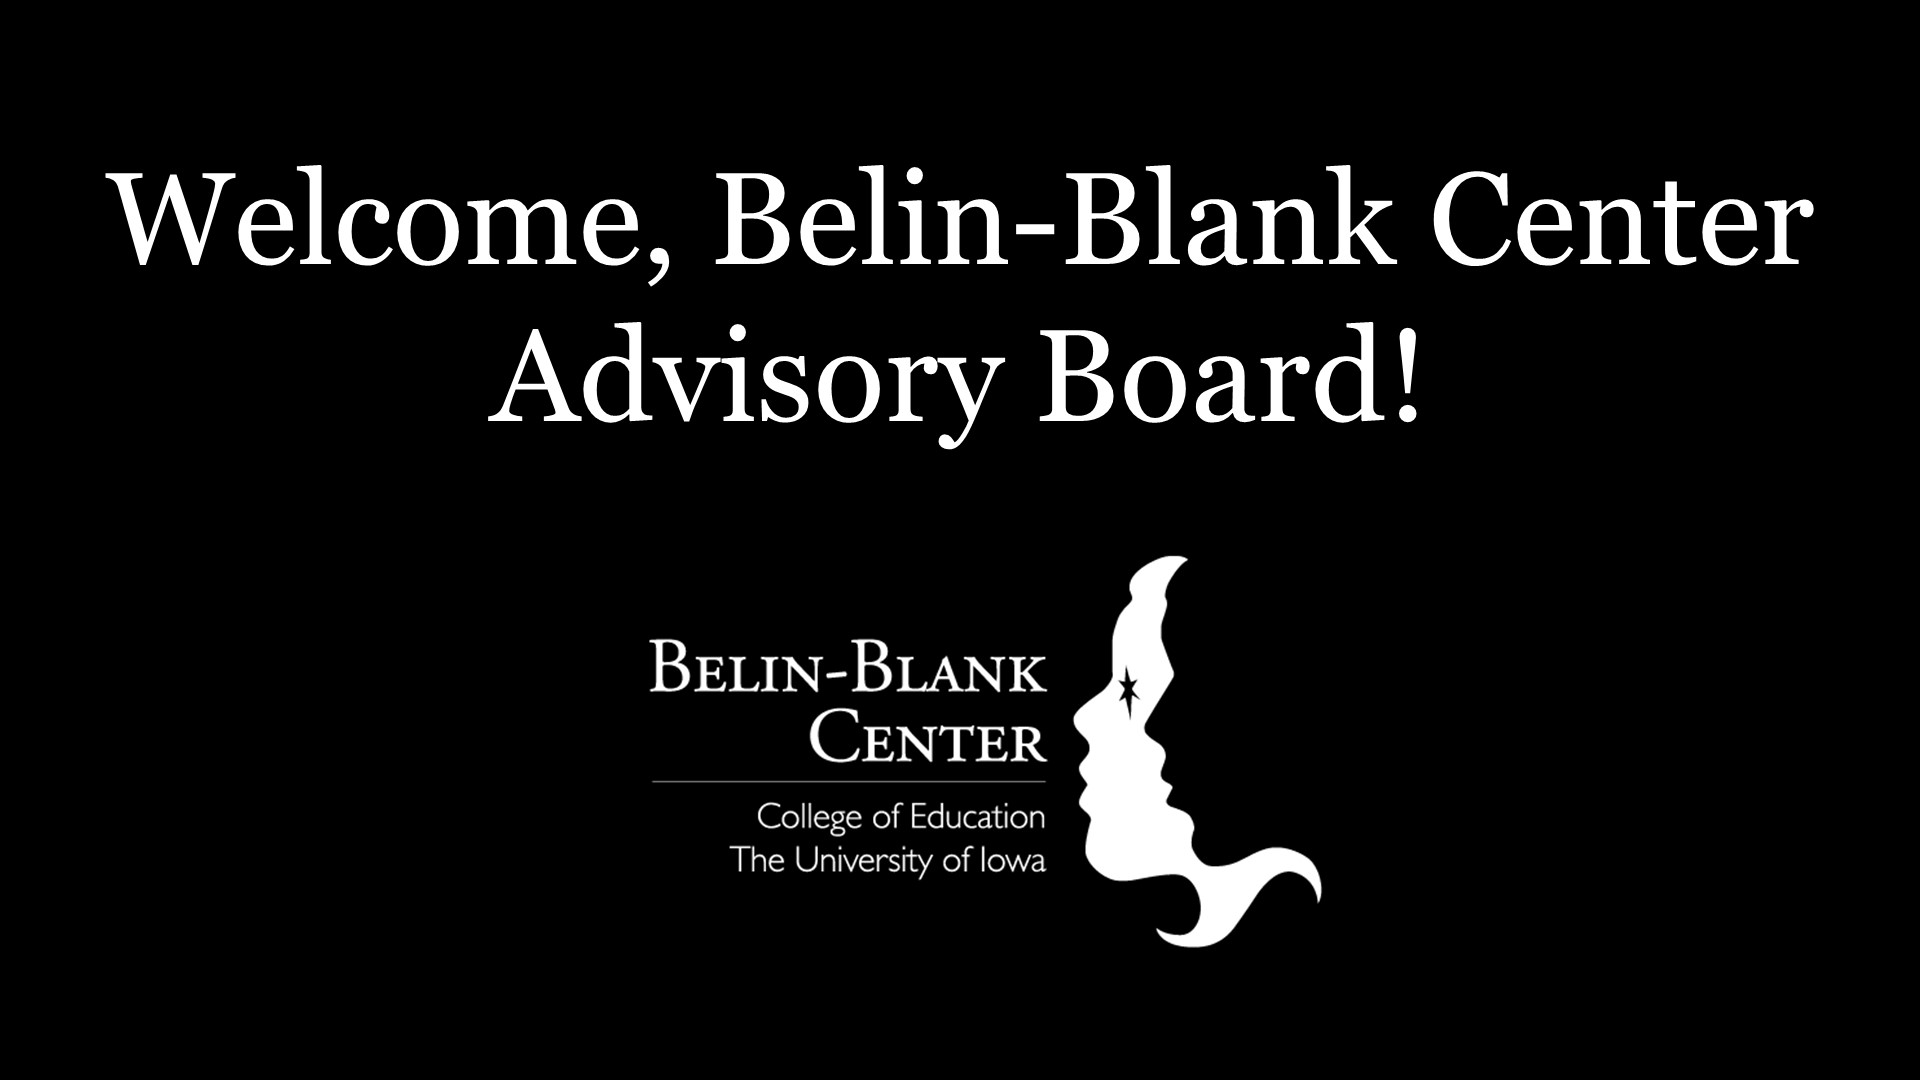 Welcome, Belin-Blank Center Advisory Board!